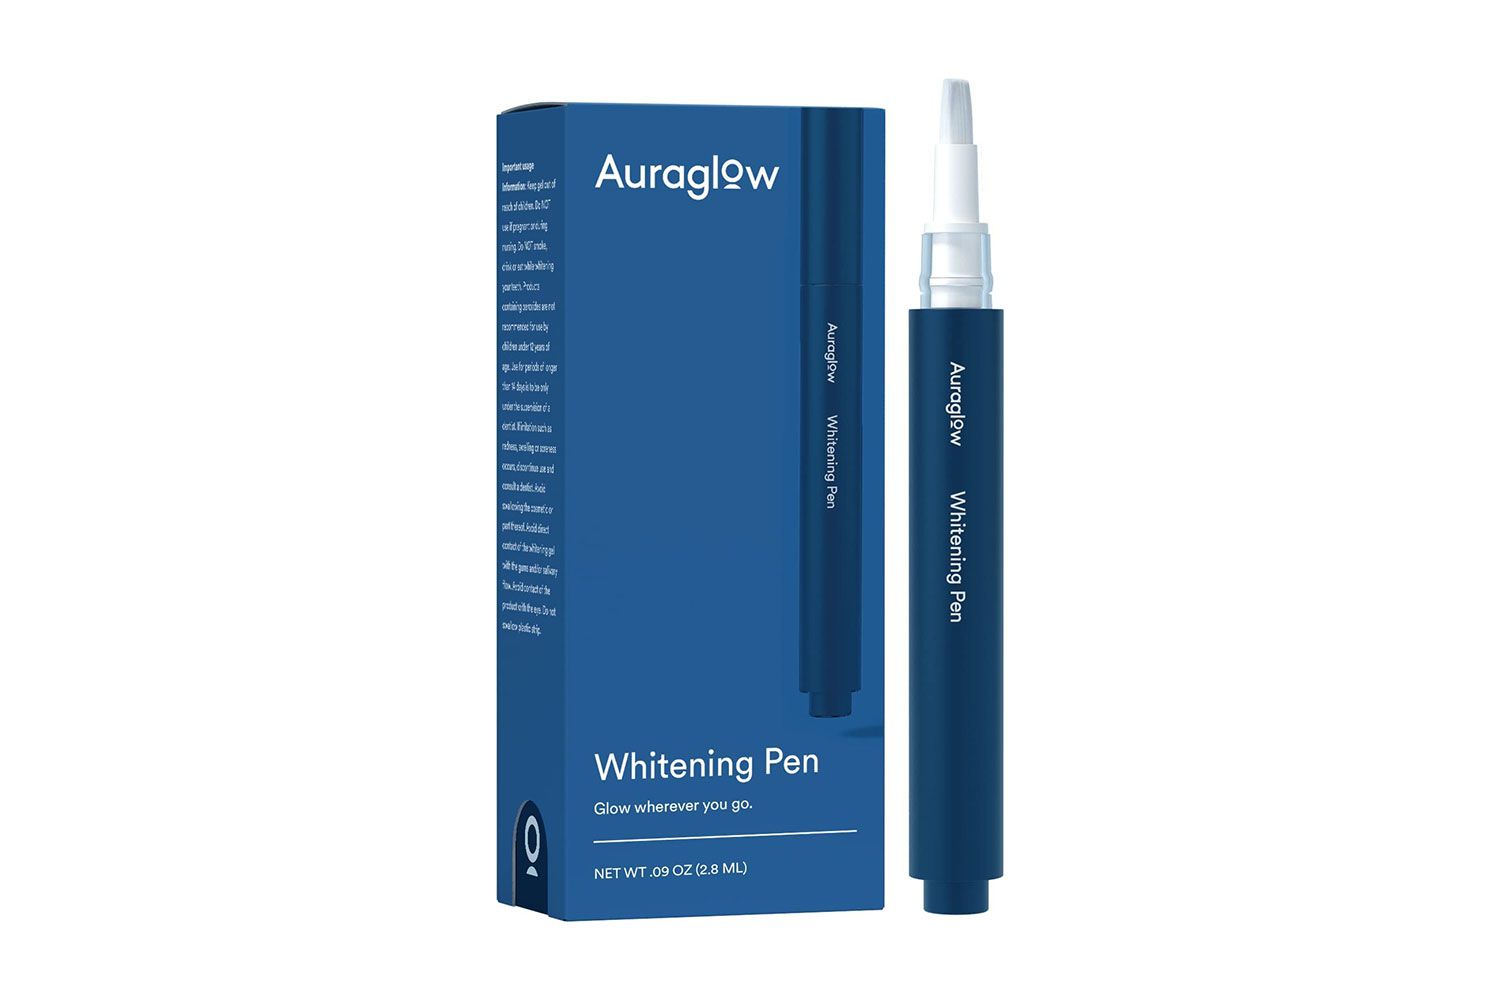 AuraGlow Teeth Whitening Pen